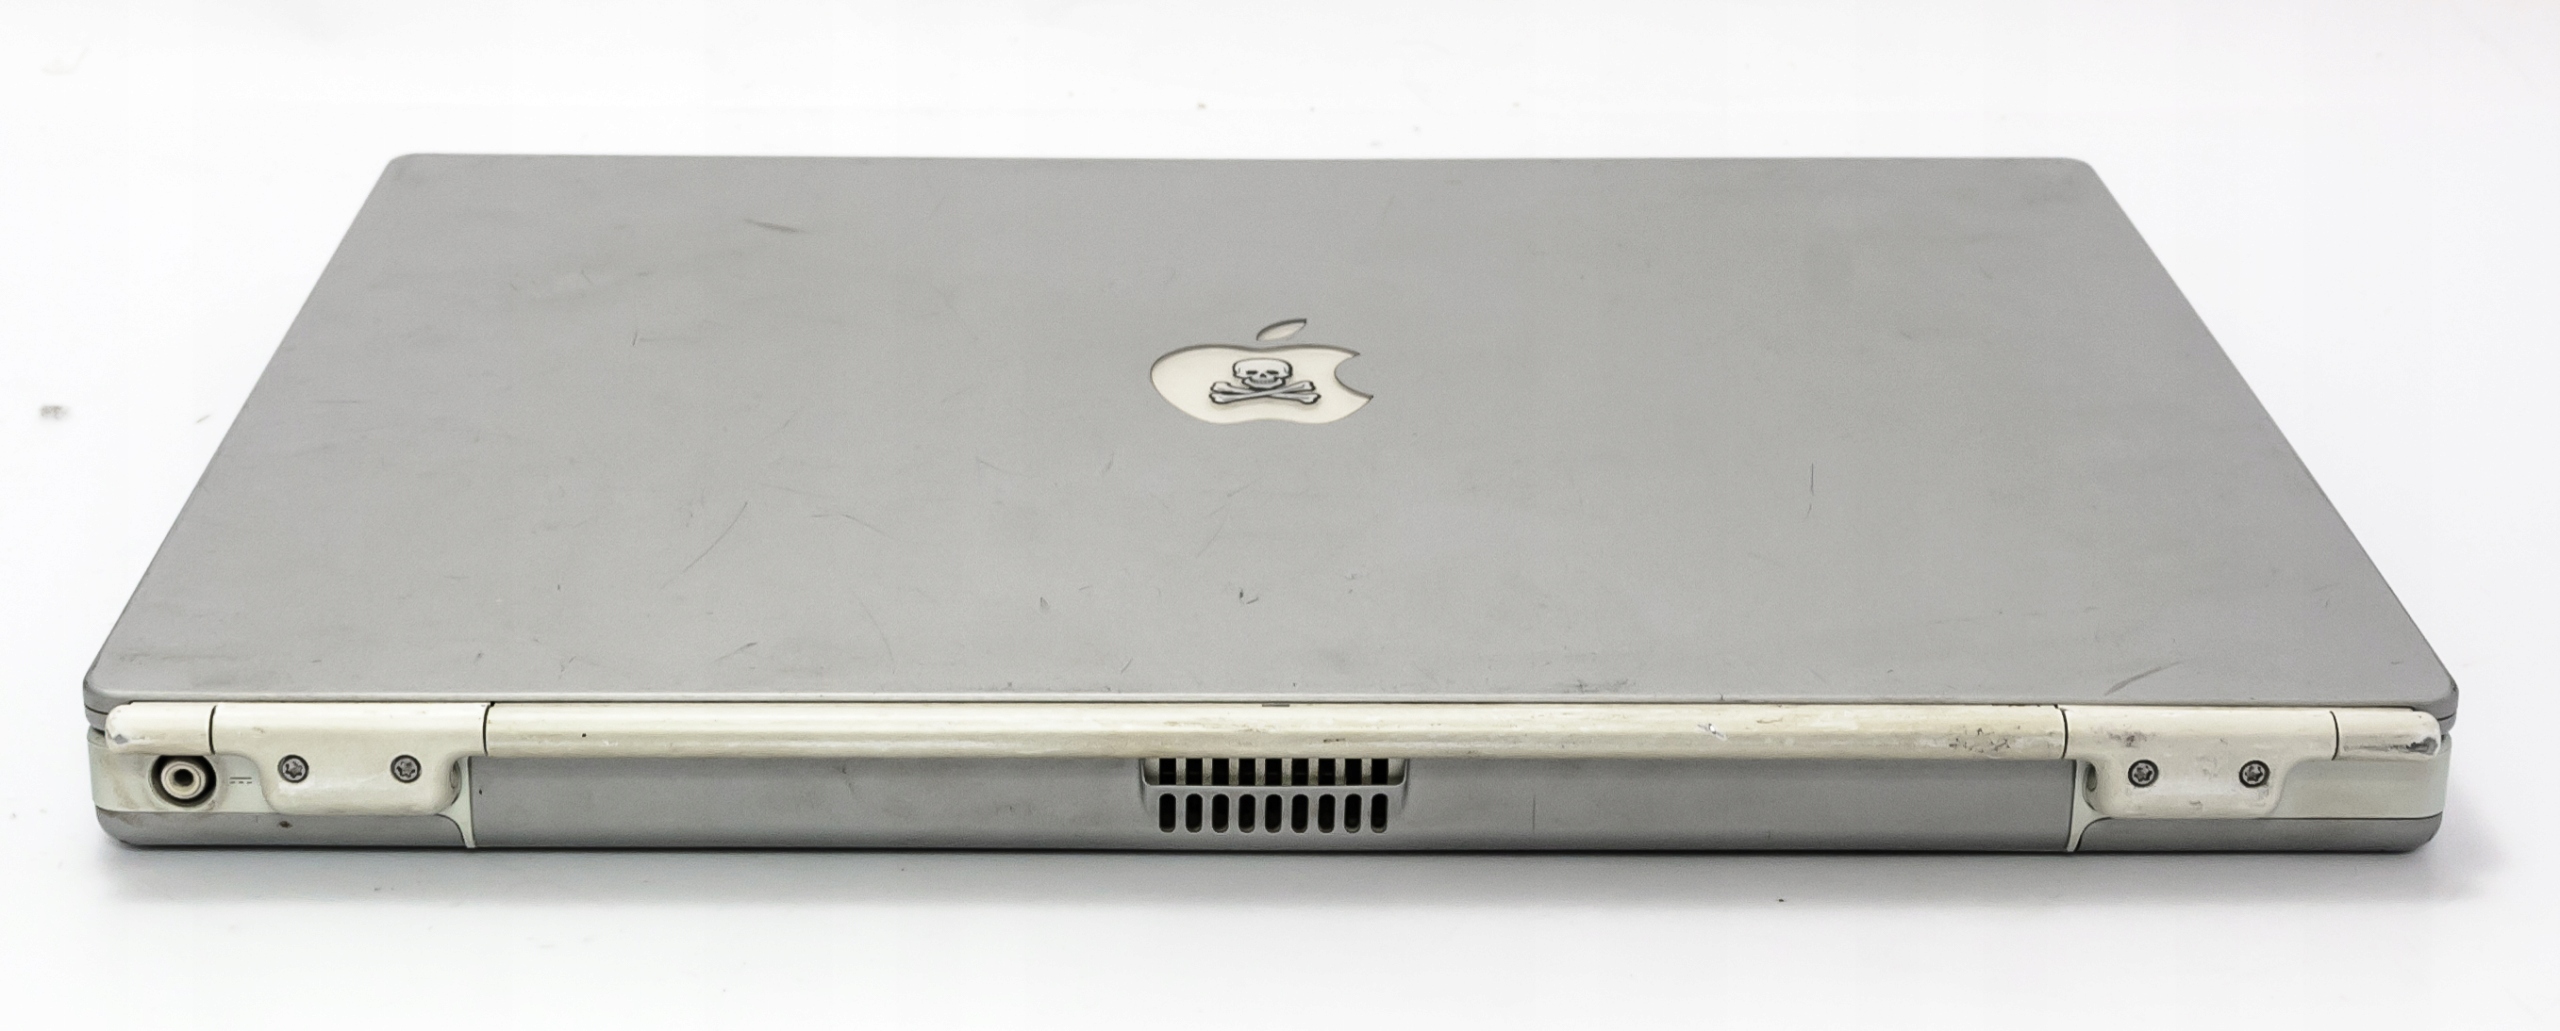 Apple PowerBook G4 2002 A1025 通電OK/ジャンク品